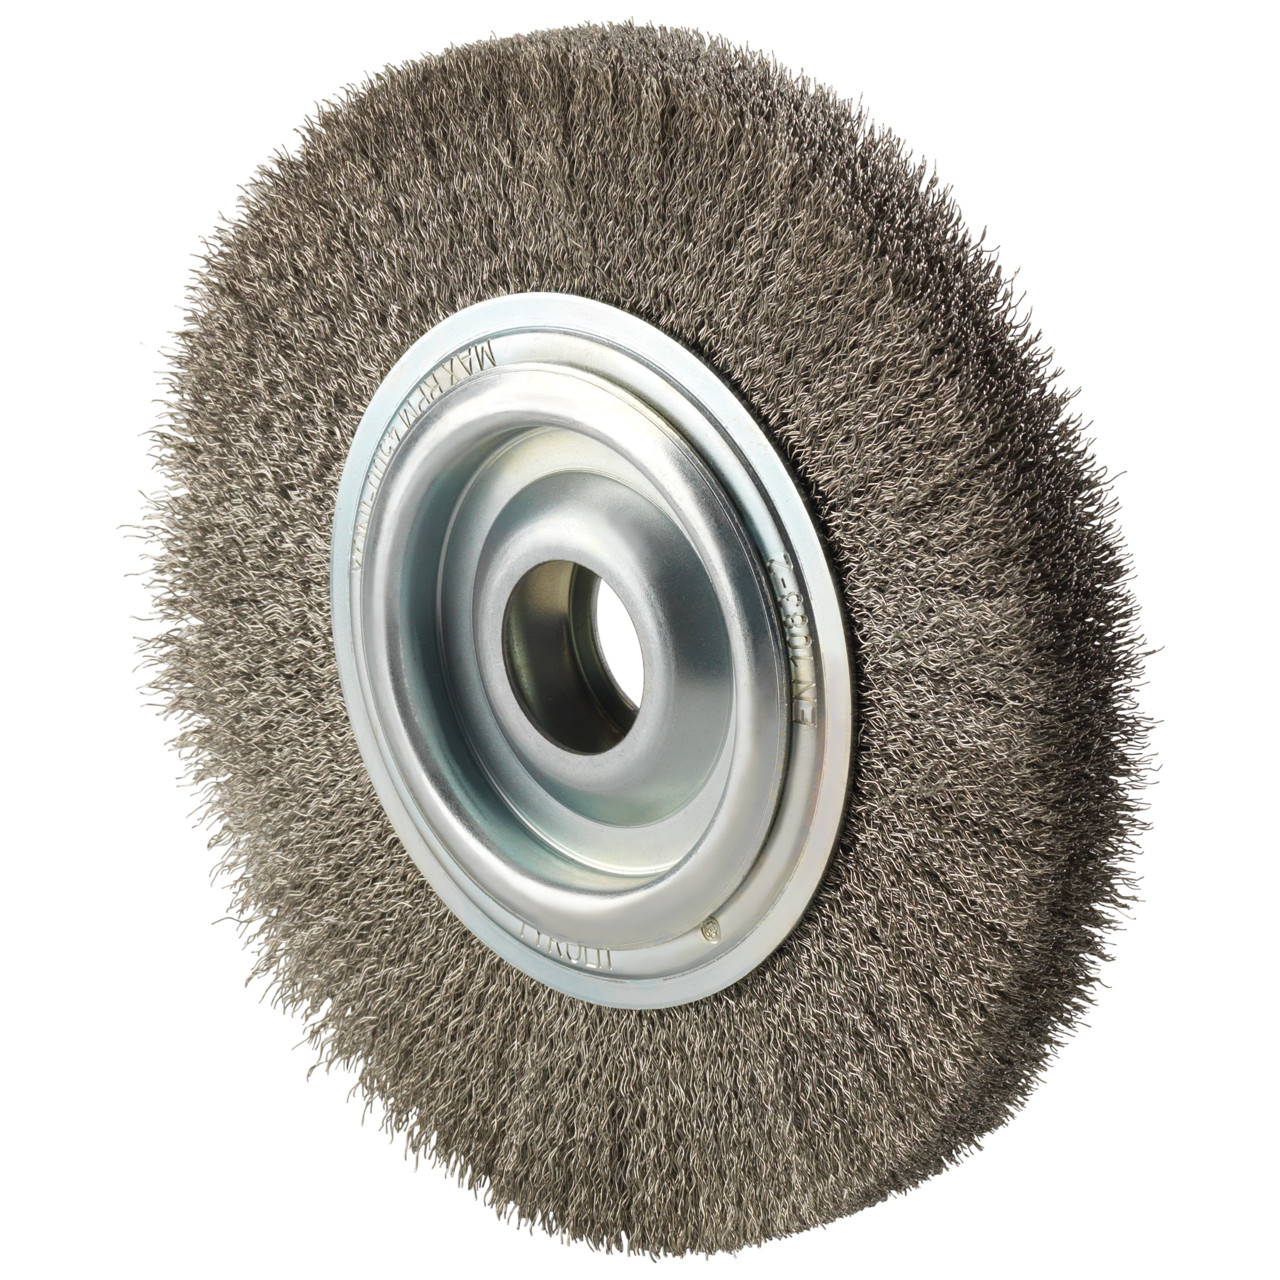 Spazzole rotonde Tyrolit DxLxH 200x45x40x32 Per acciaio inox, forma: 1RDW - (spazzole rotonde), Art. 896124